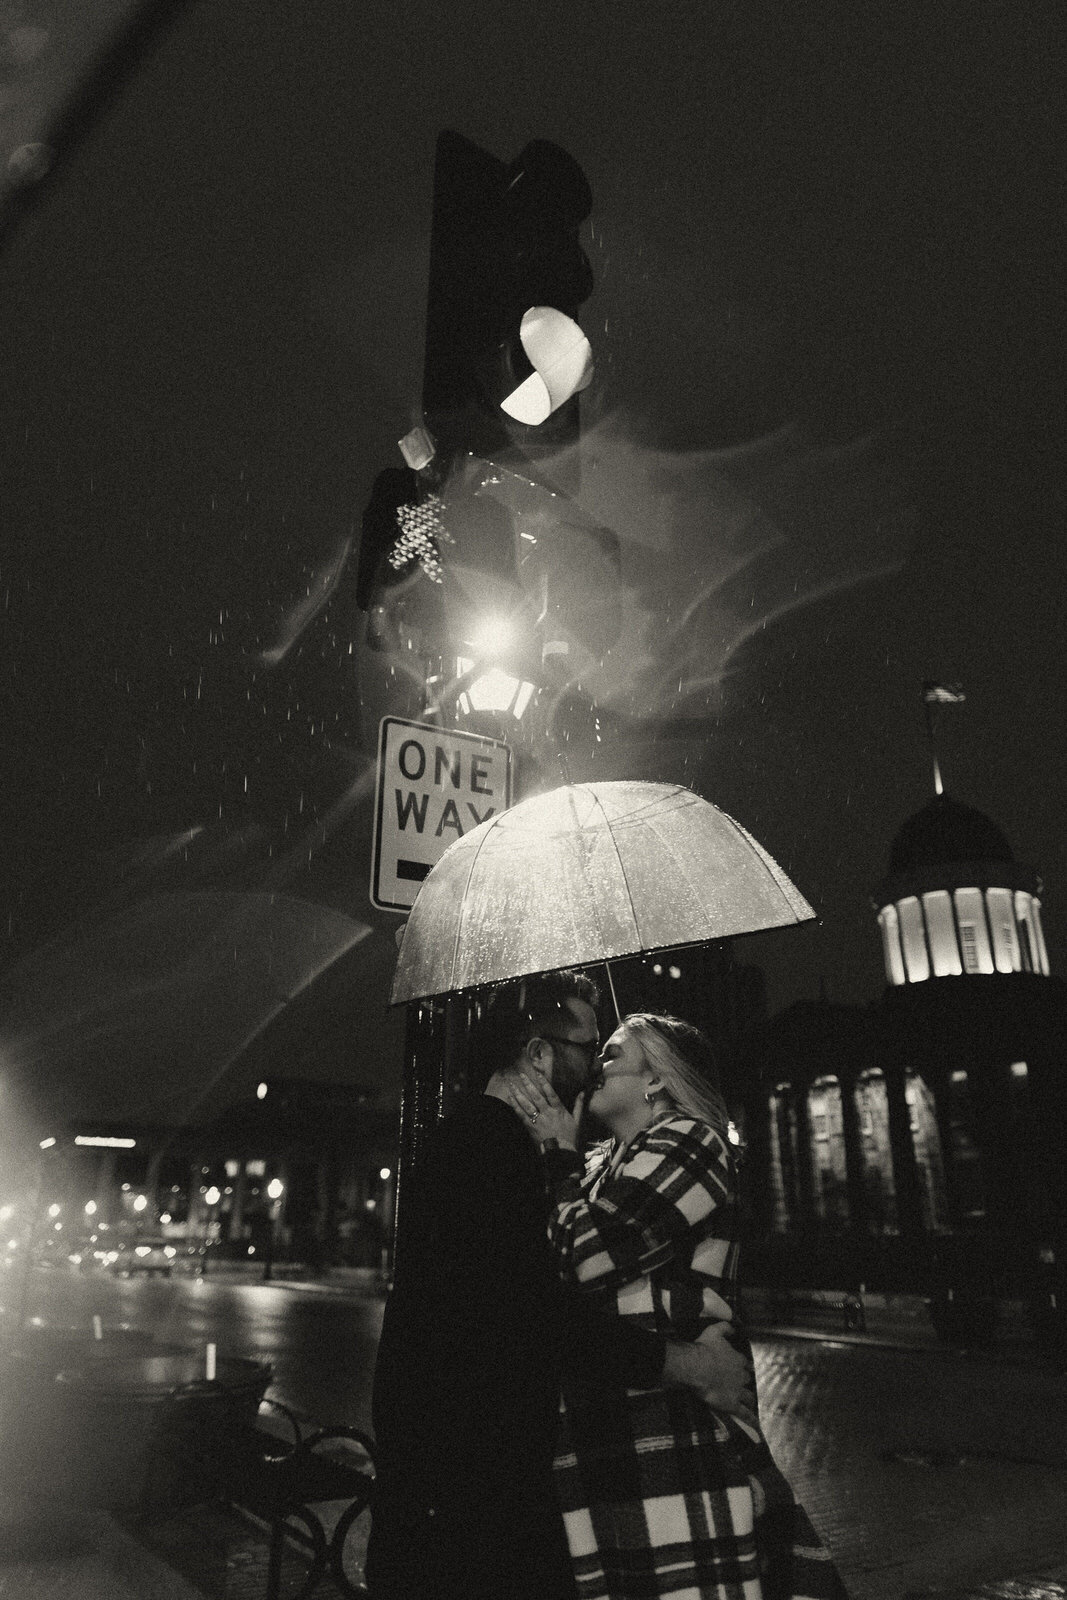 couples-rain-playful-night-session-downtown-moody-umbrella-film-illinois-8